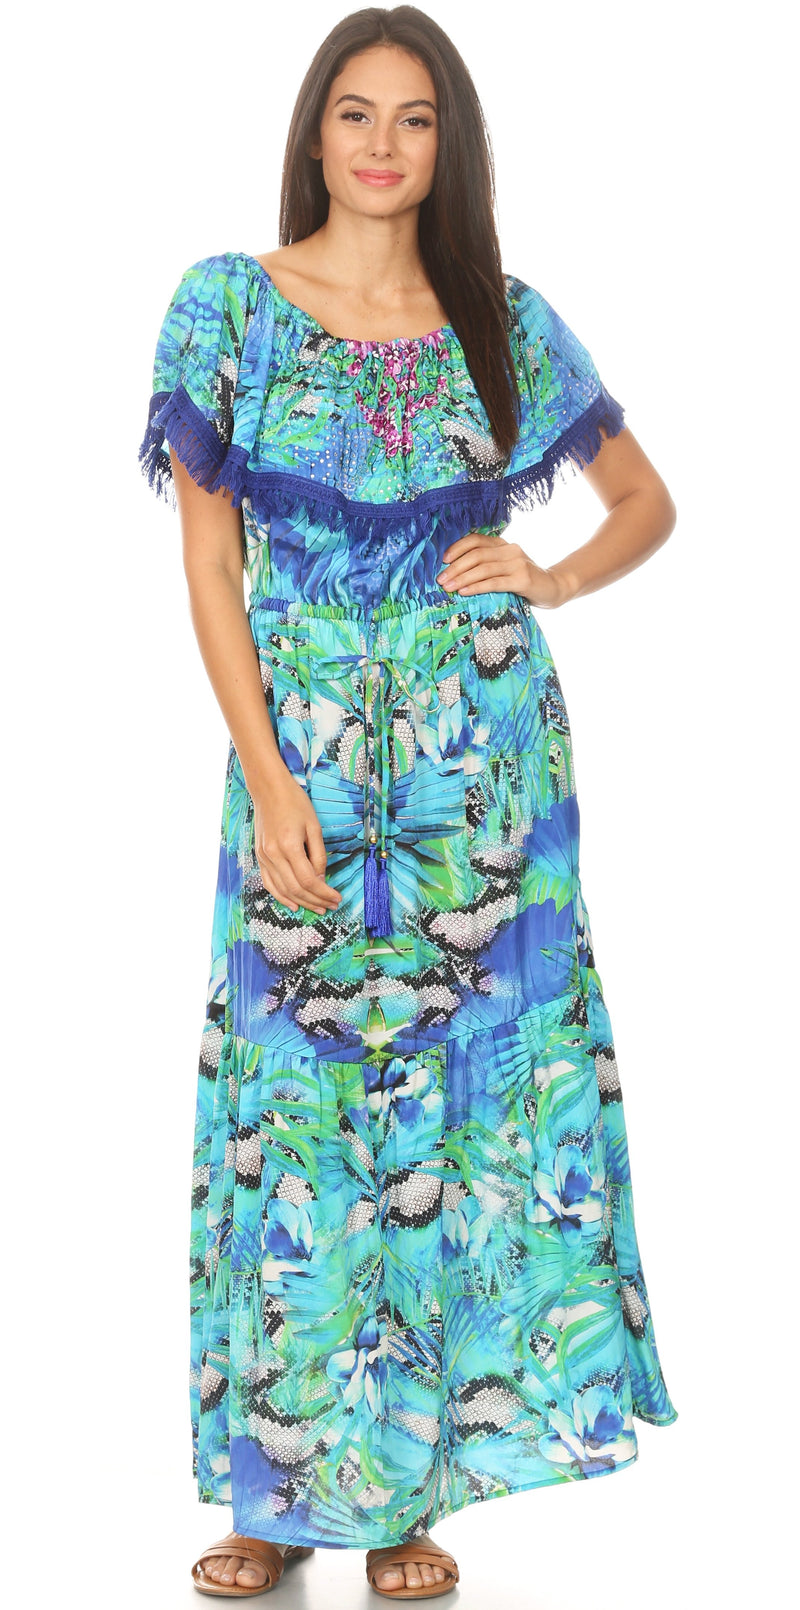 Sakkas Tara Women's Long Maxi Boho Off Shoulder Summer Casual Dress Floral Print